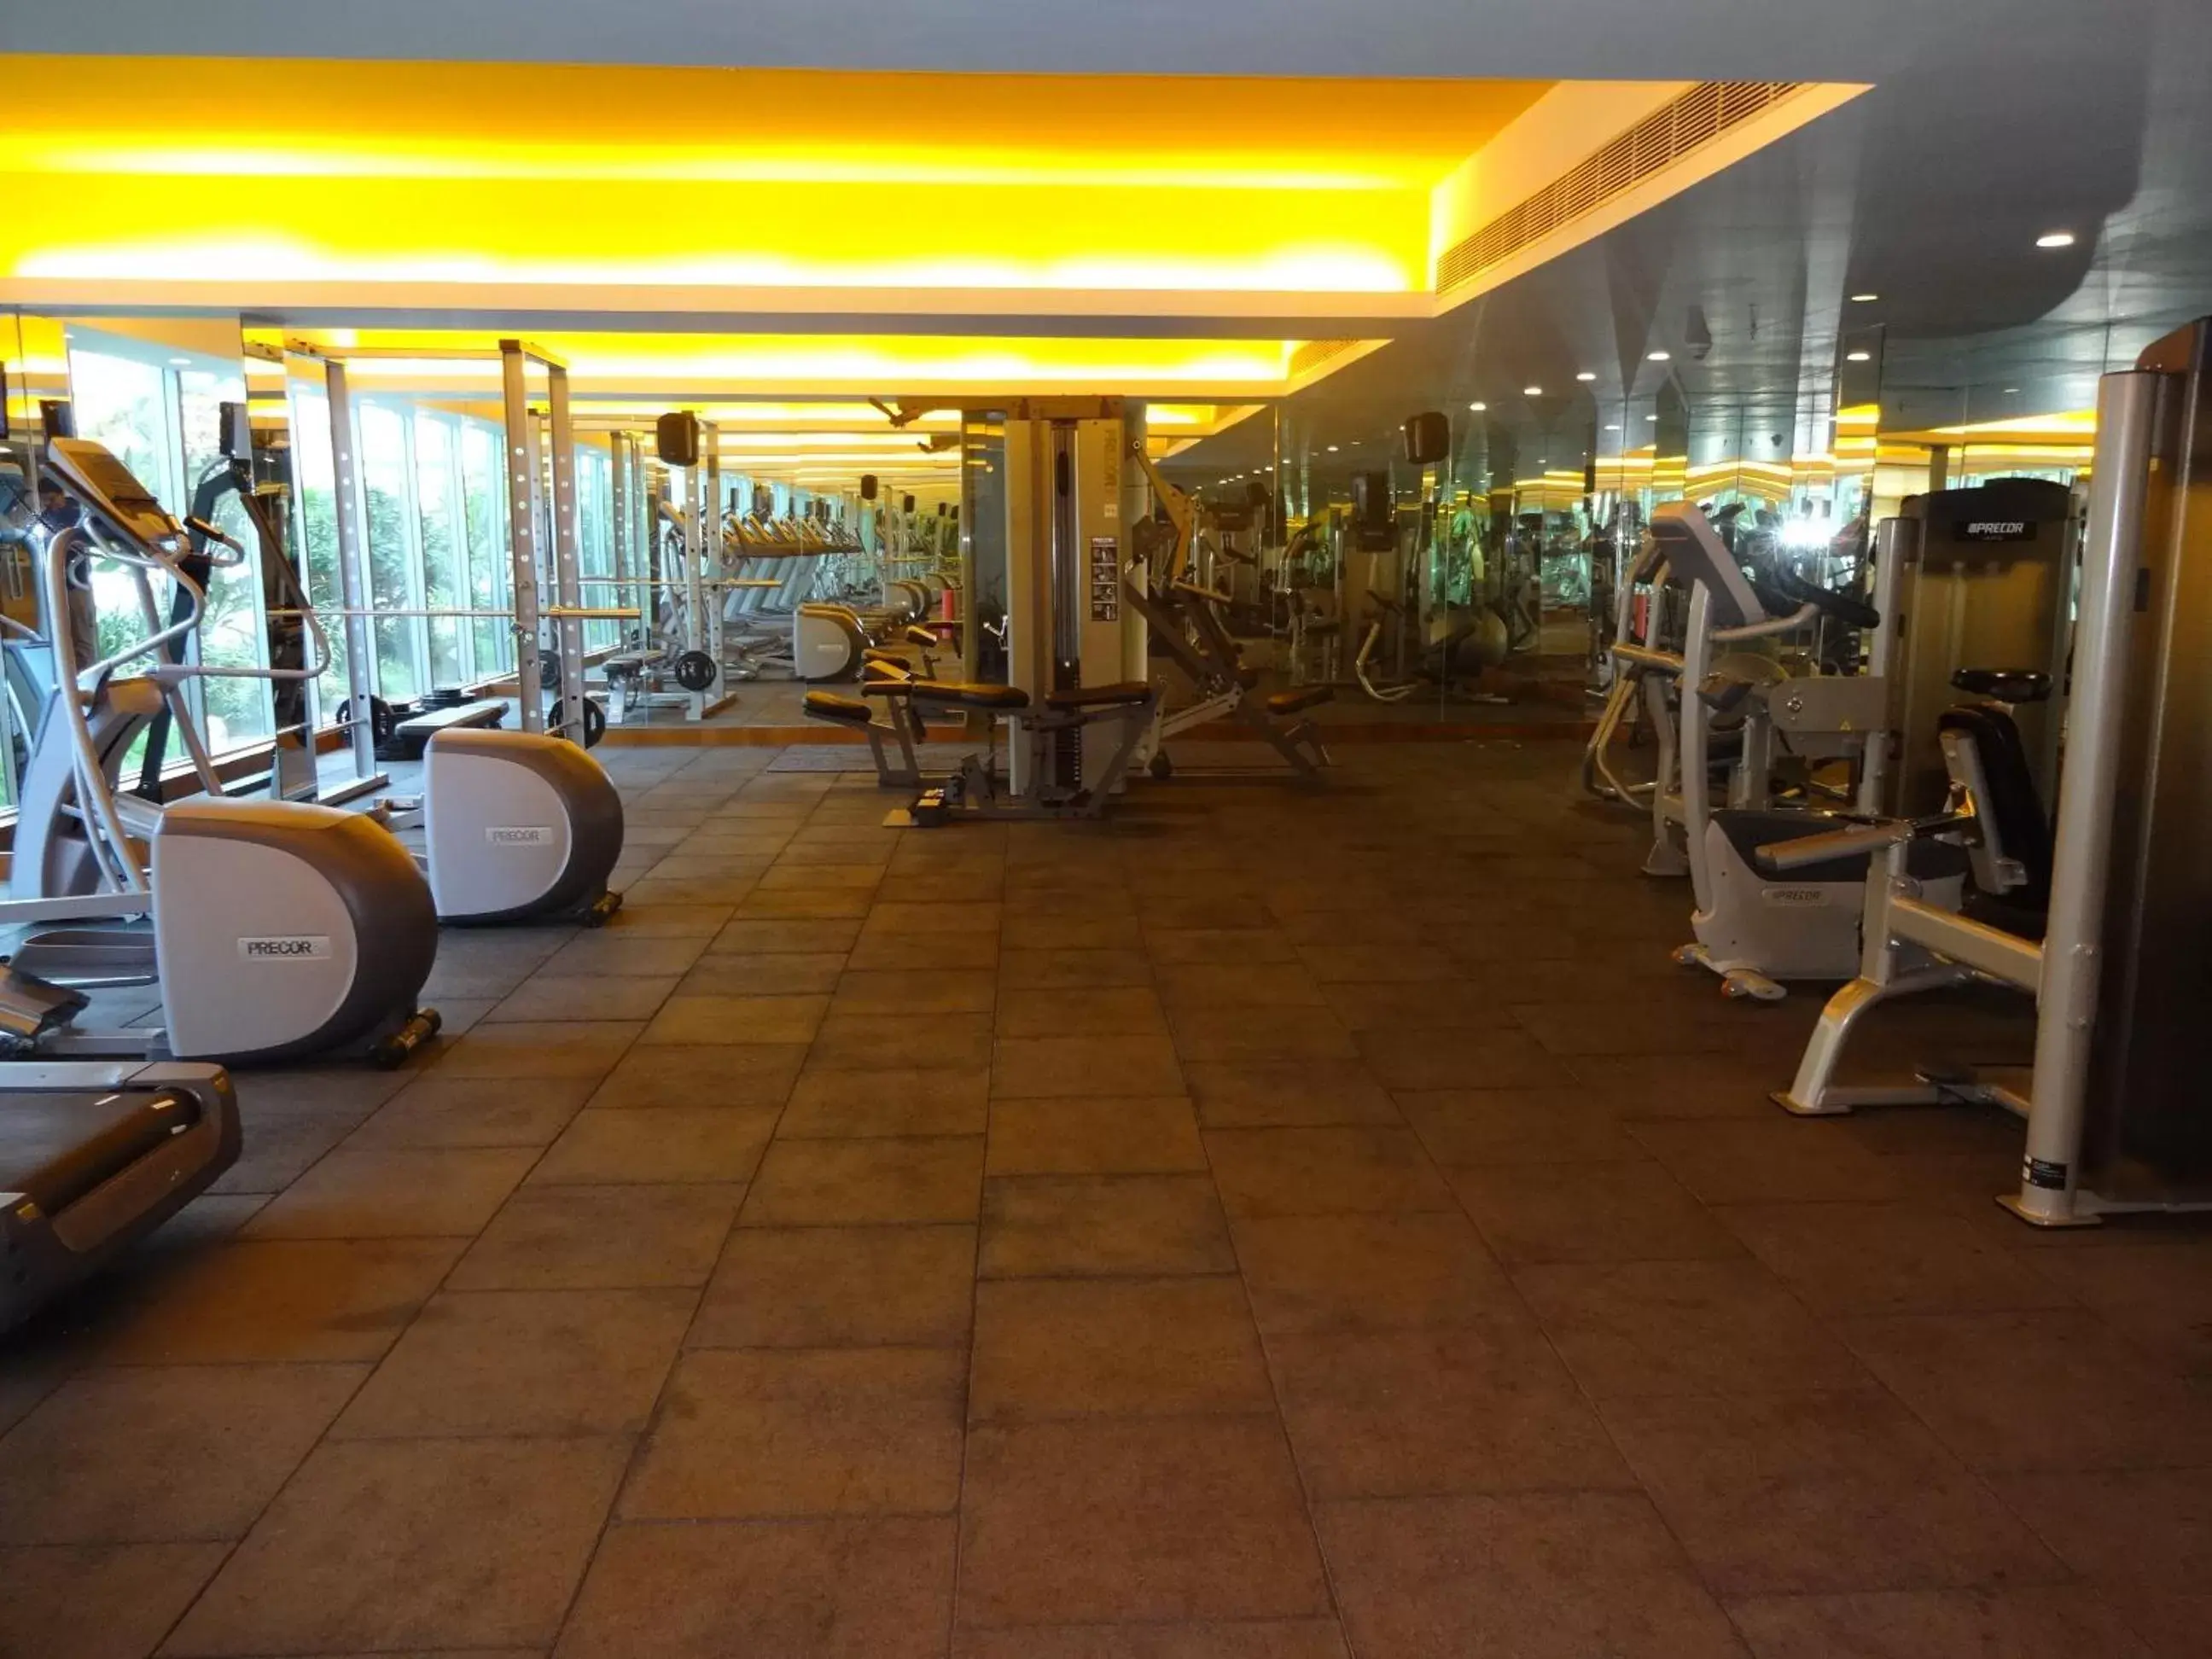 Fitness centre/facilities, Fitness Center/Facilities in Avasa Hotel